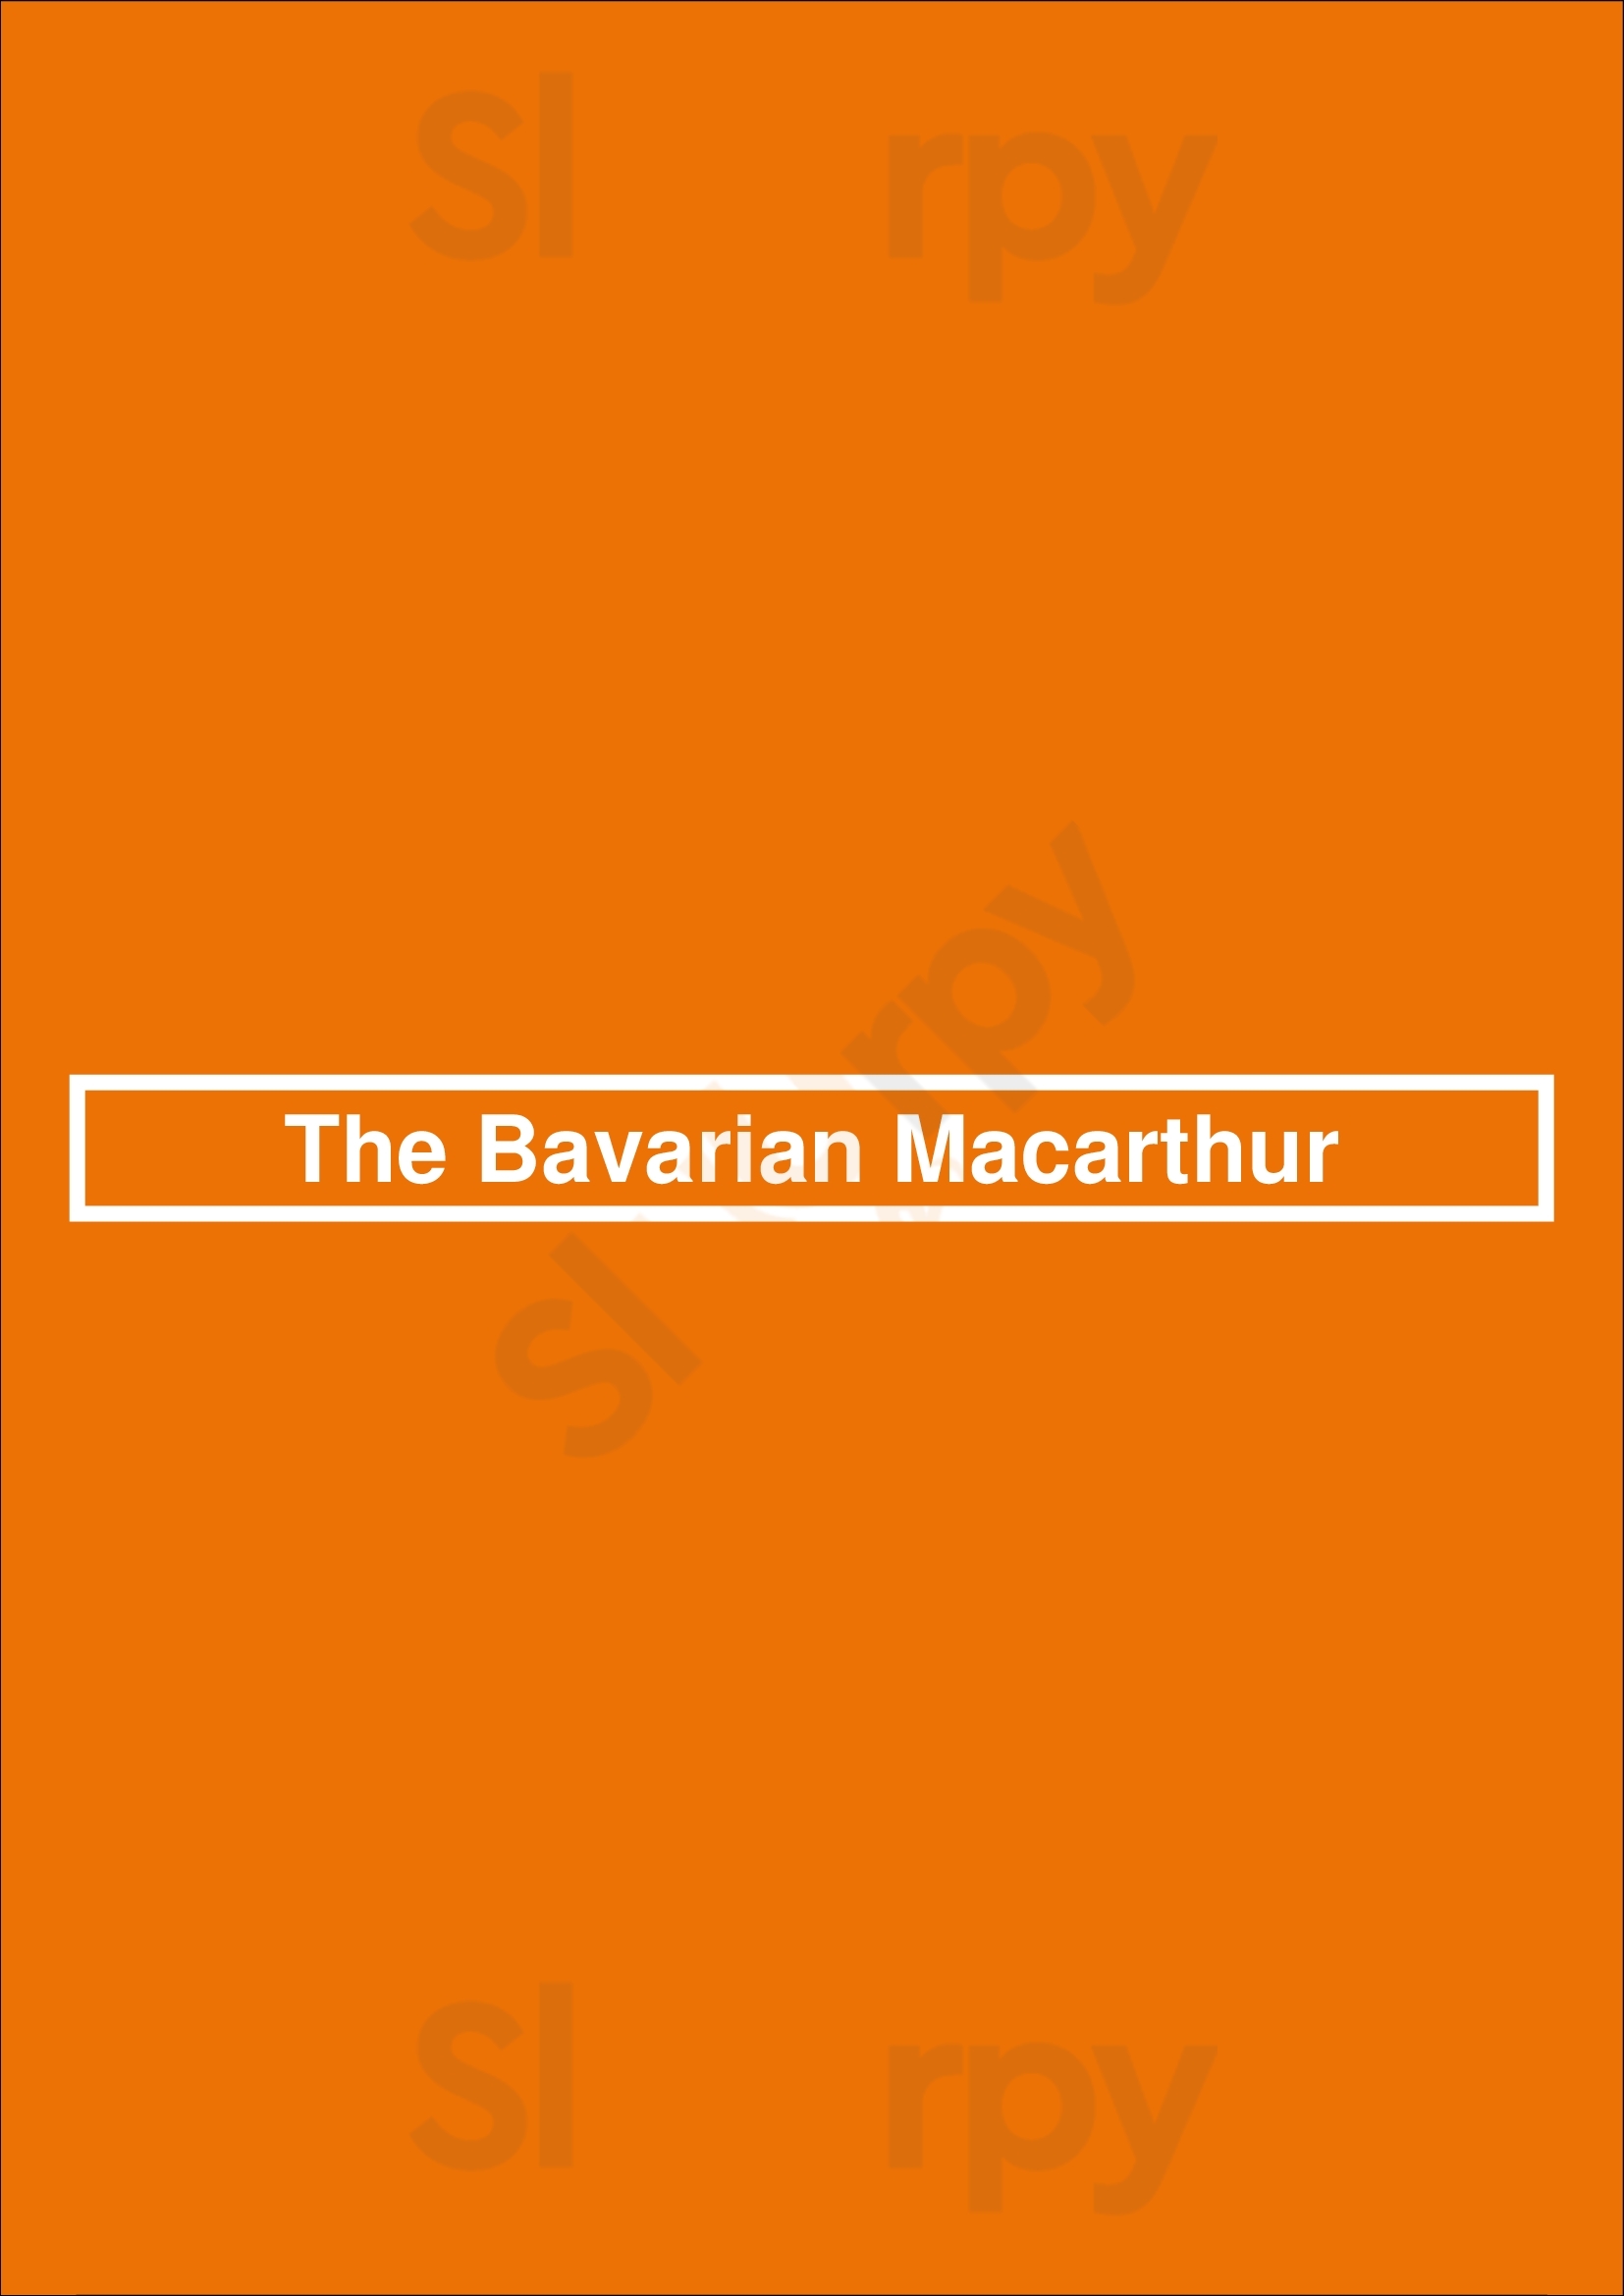 The Bavarian Macarthur Campbelltown Menu - 1